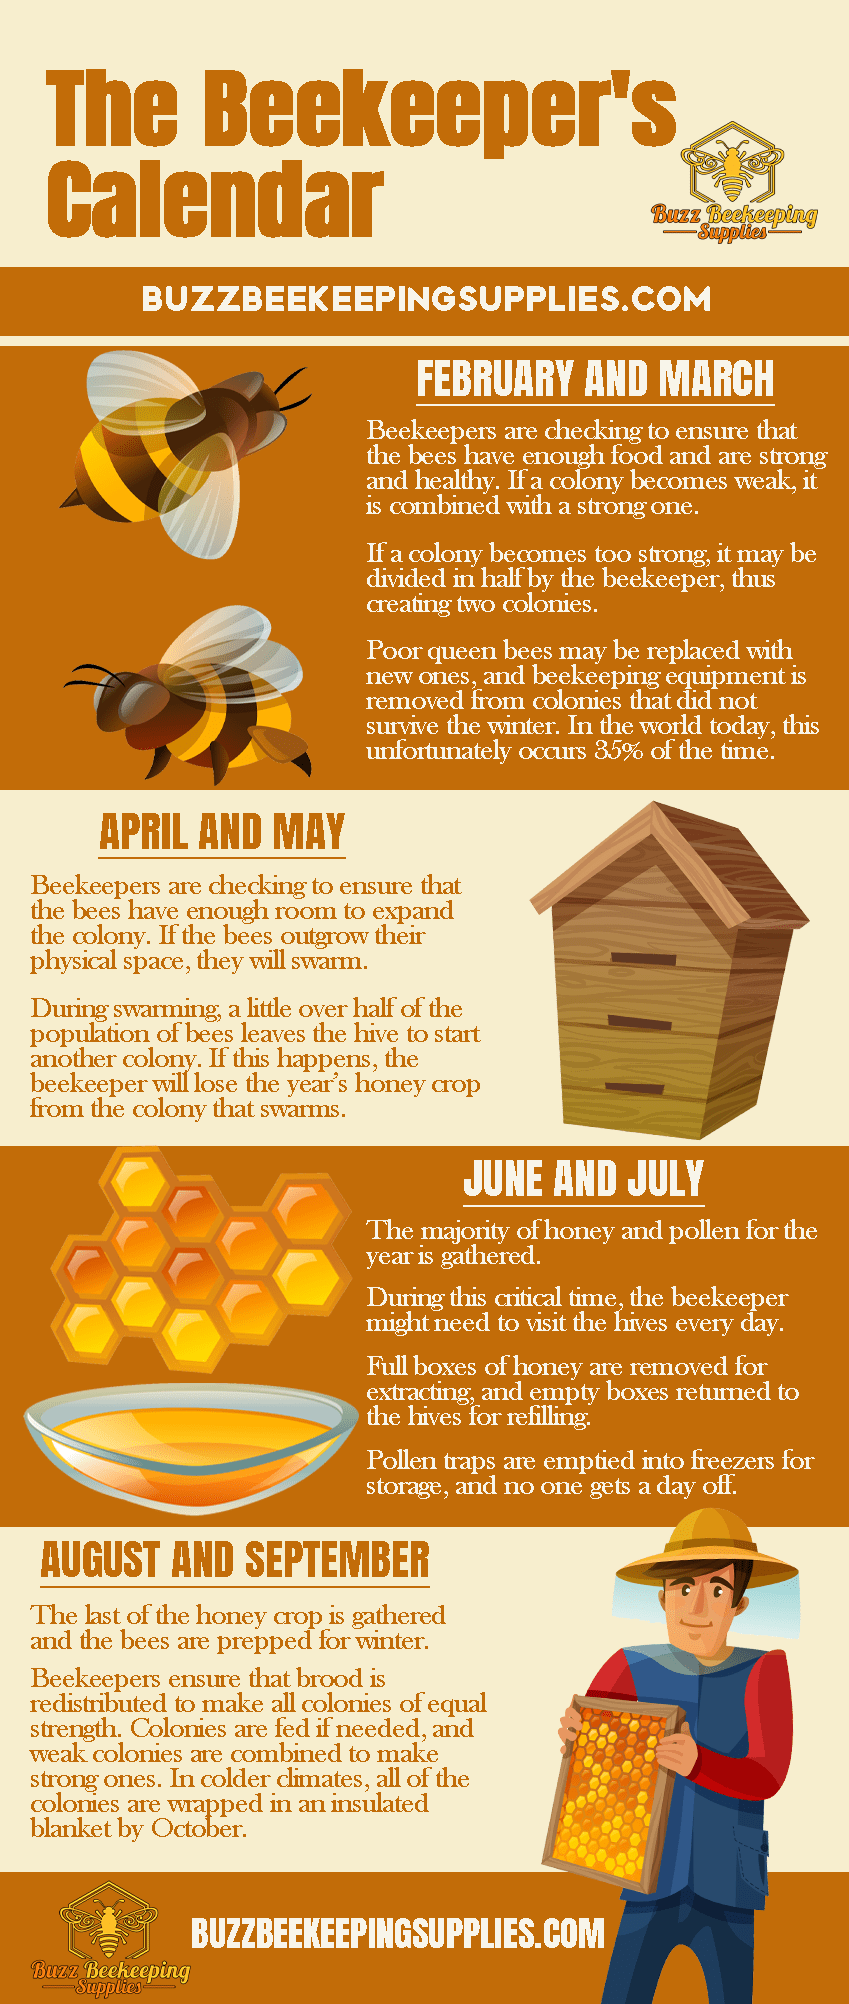 The Beekeeper's Calendar